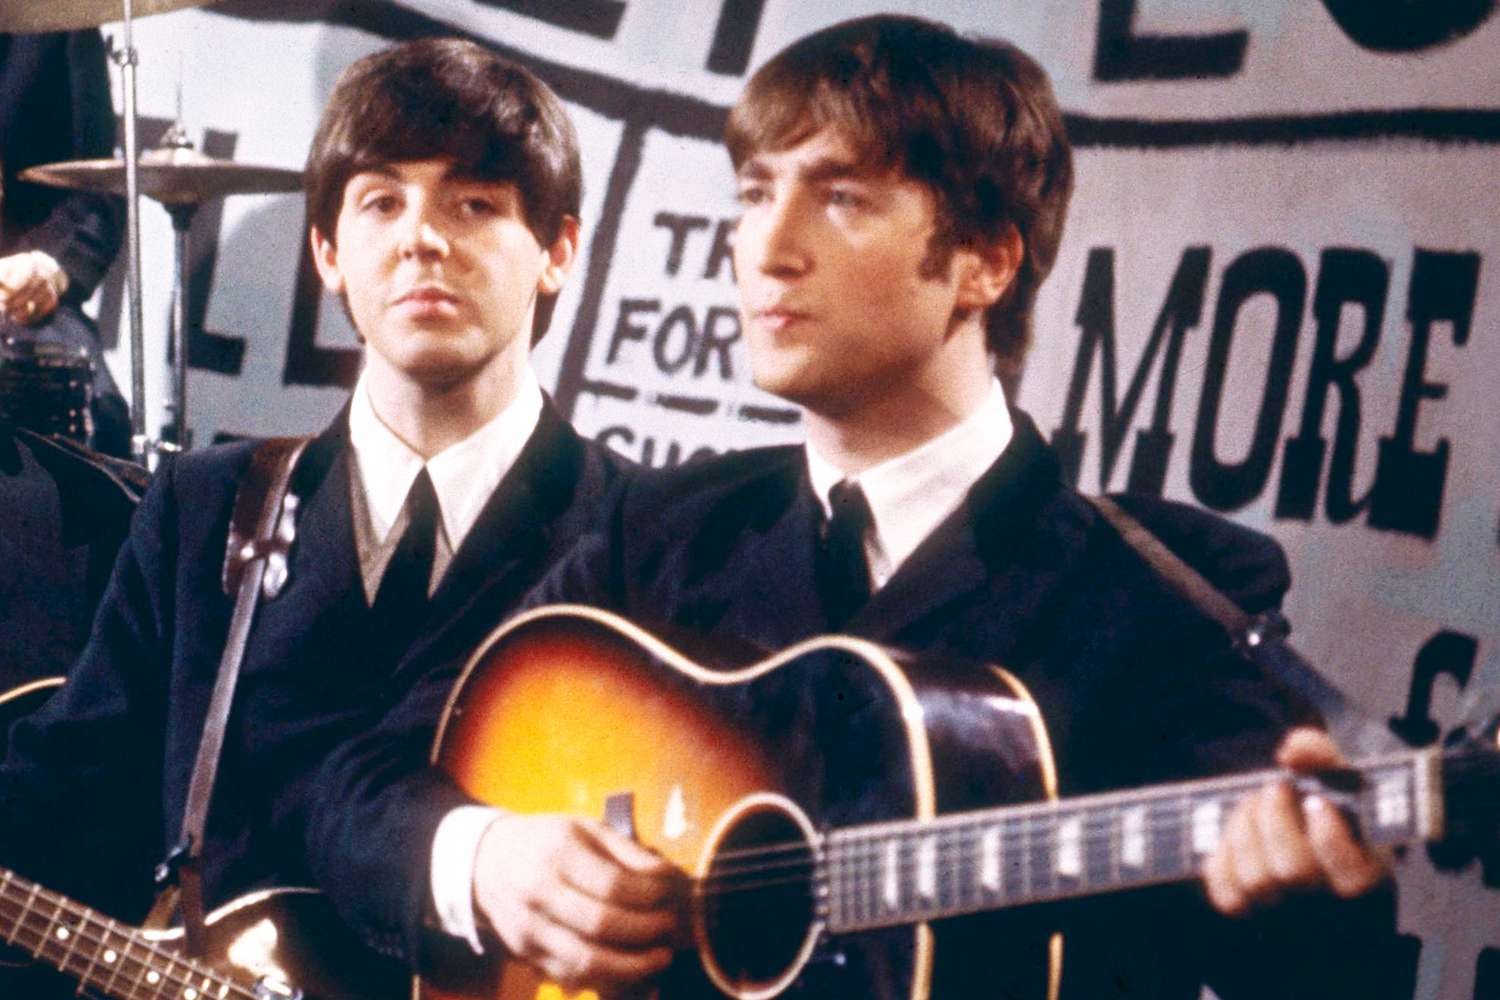 Paul McCartney and John Lennon during a Beatles performance